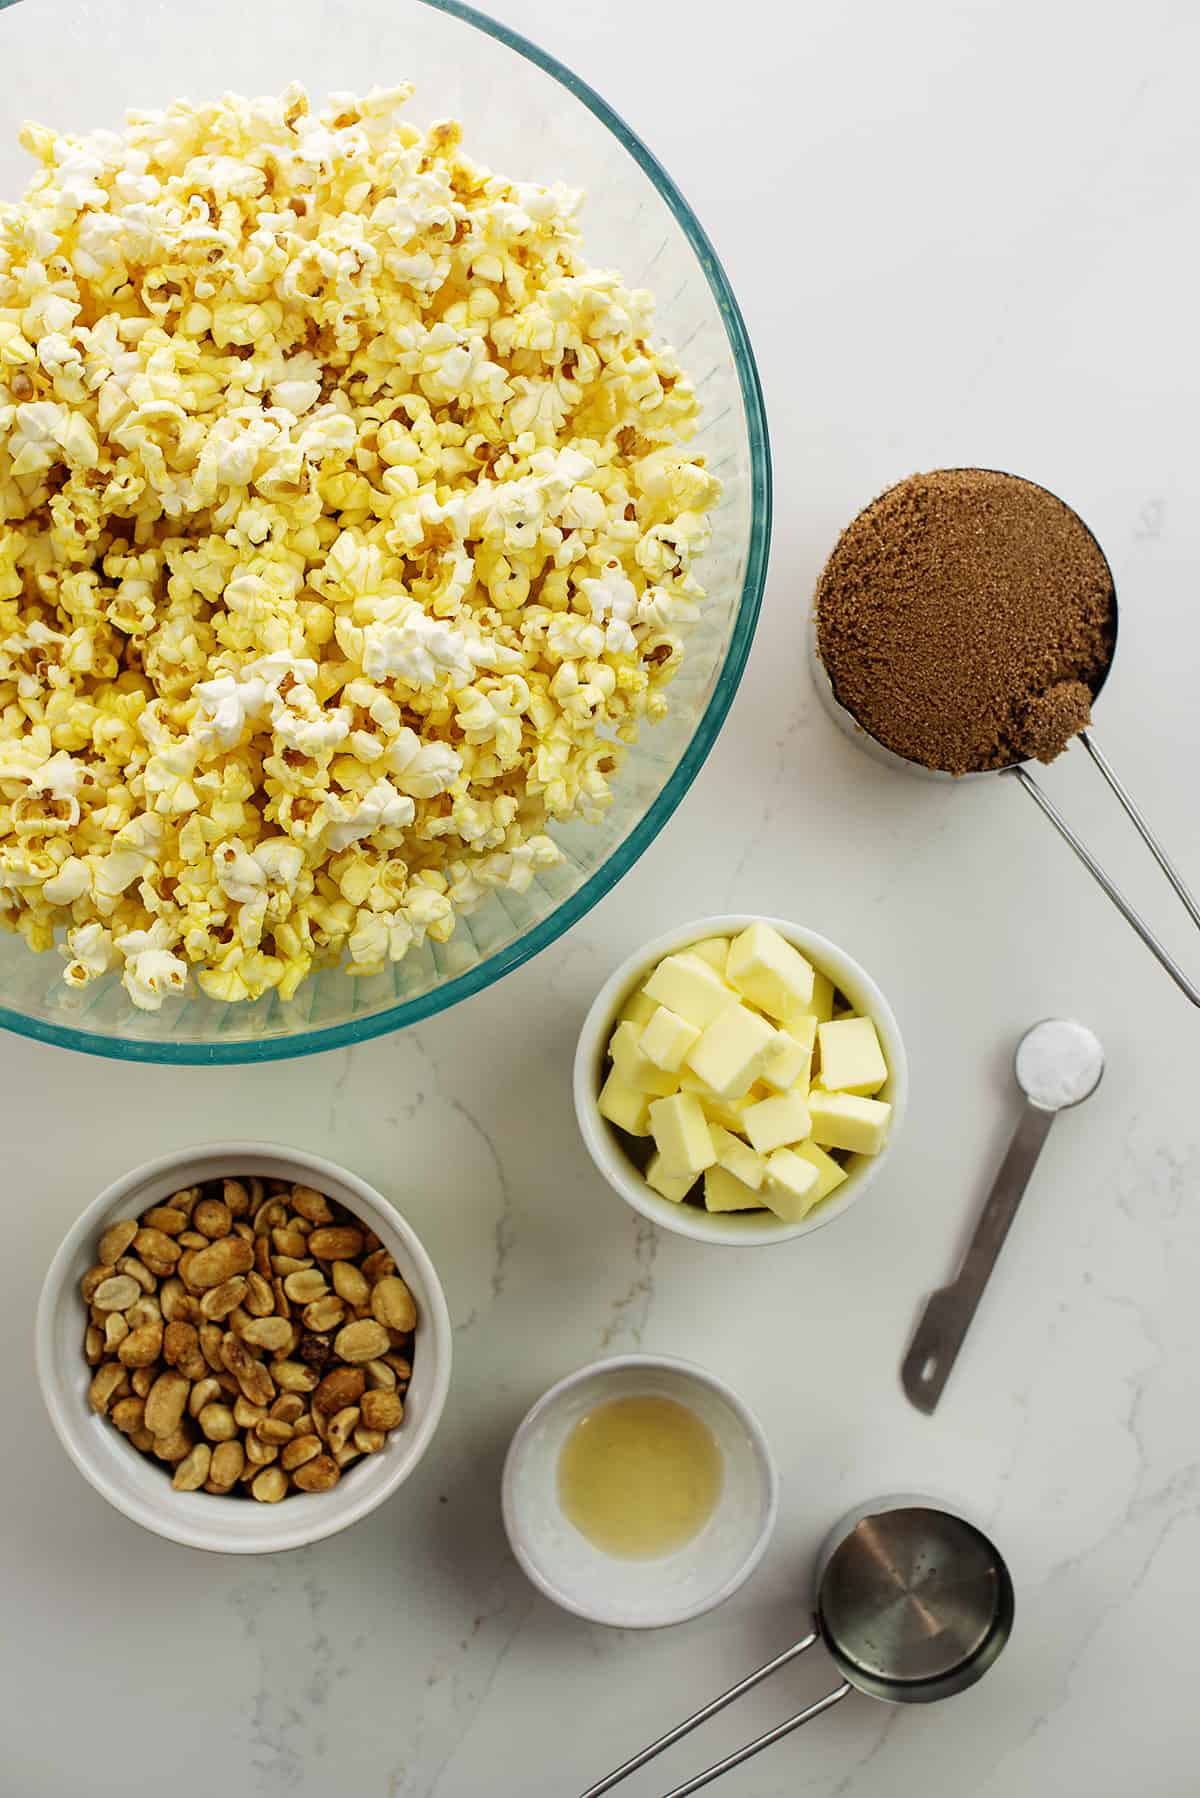 Ingredients for homemade caramel corn.